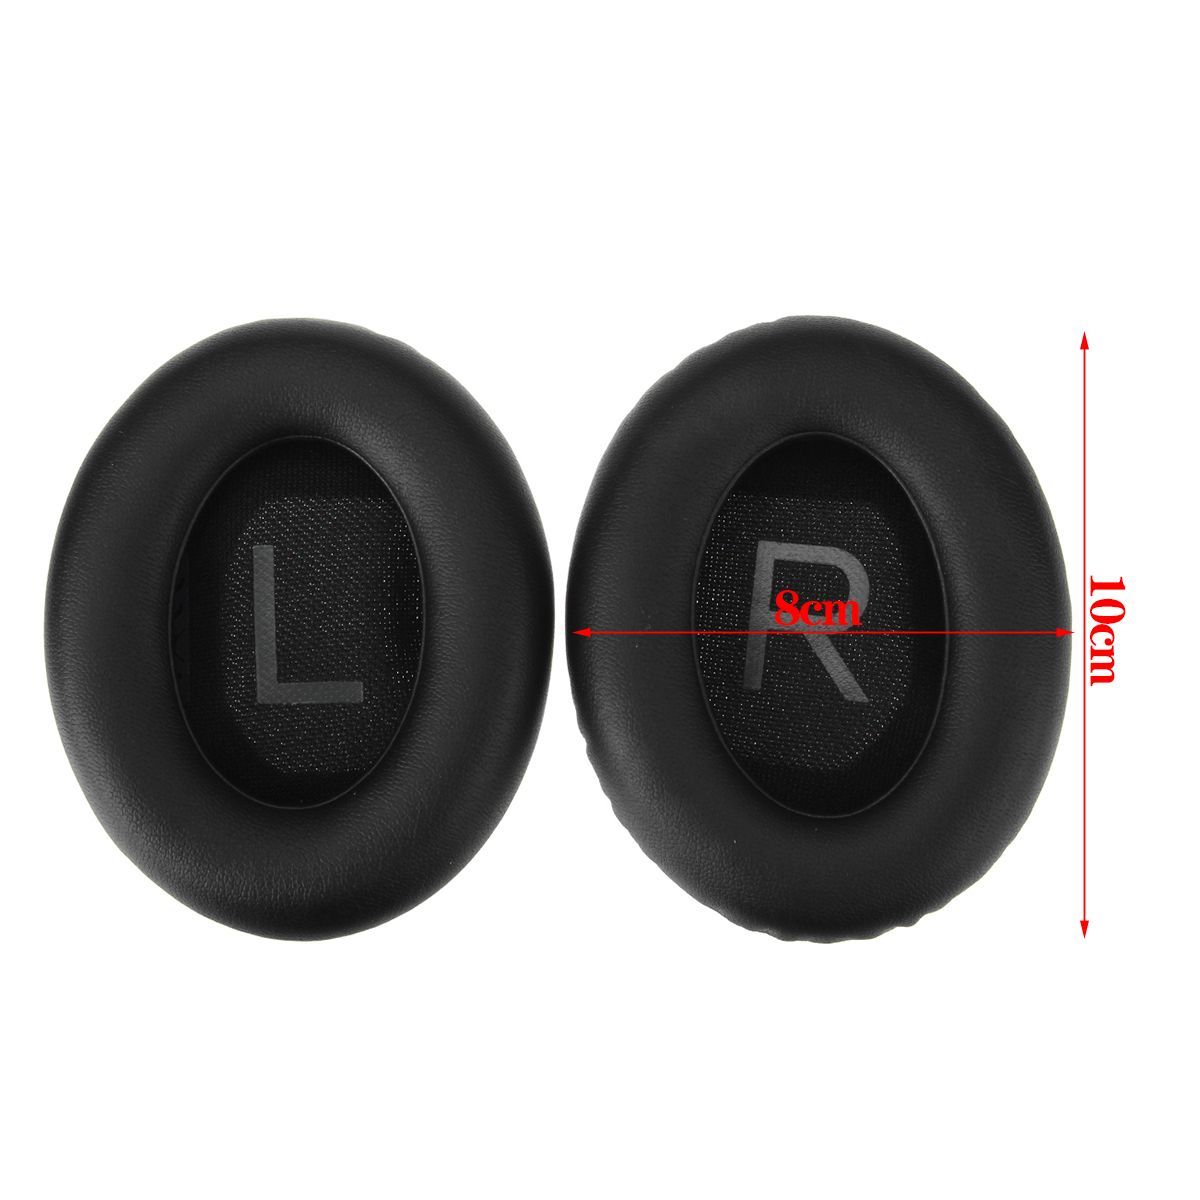 Leather-Replacement-Memory-Foam-Headphone-Earpads-forBose-700-QC35-QC35II-QC25-Headset-1617369